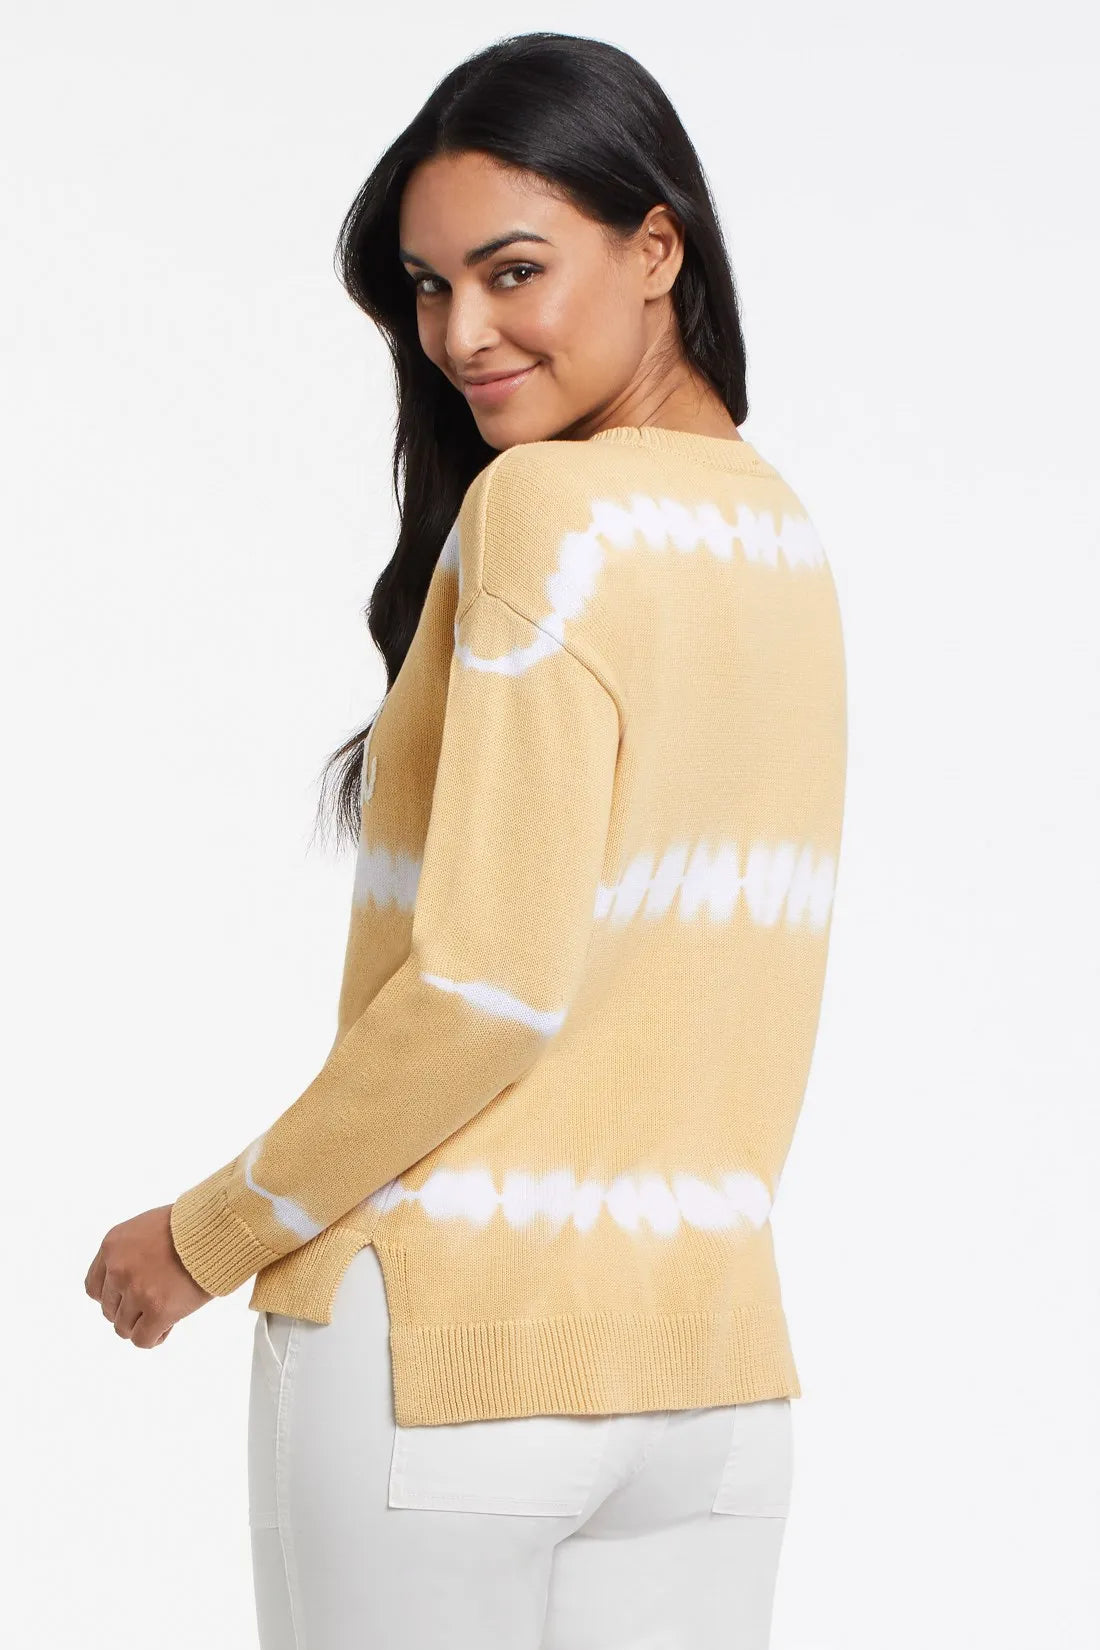 Tribal Fashions SUNSHINE Sweater